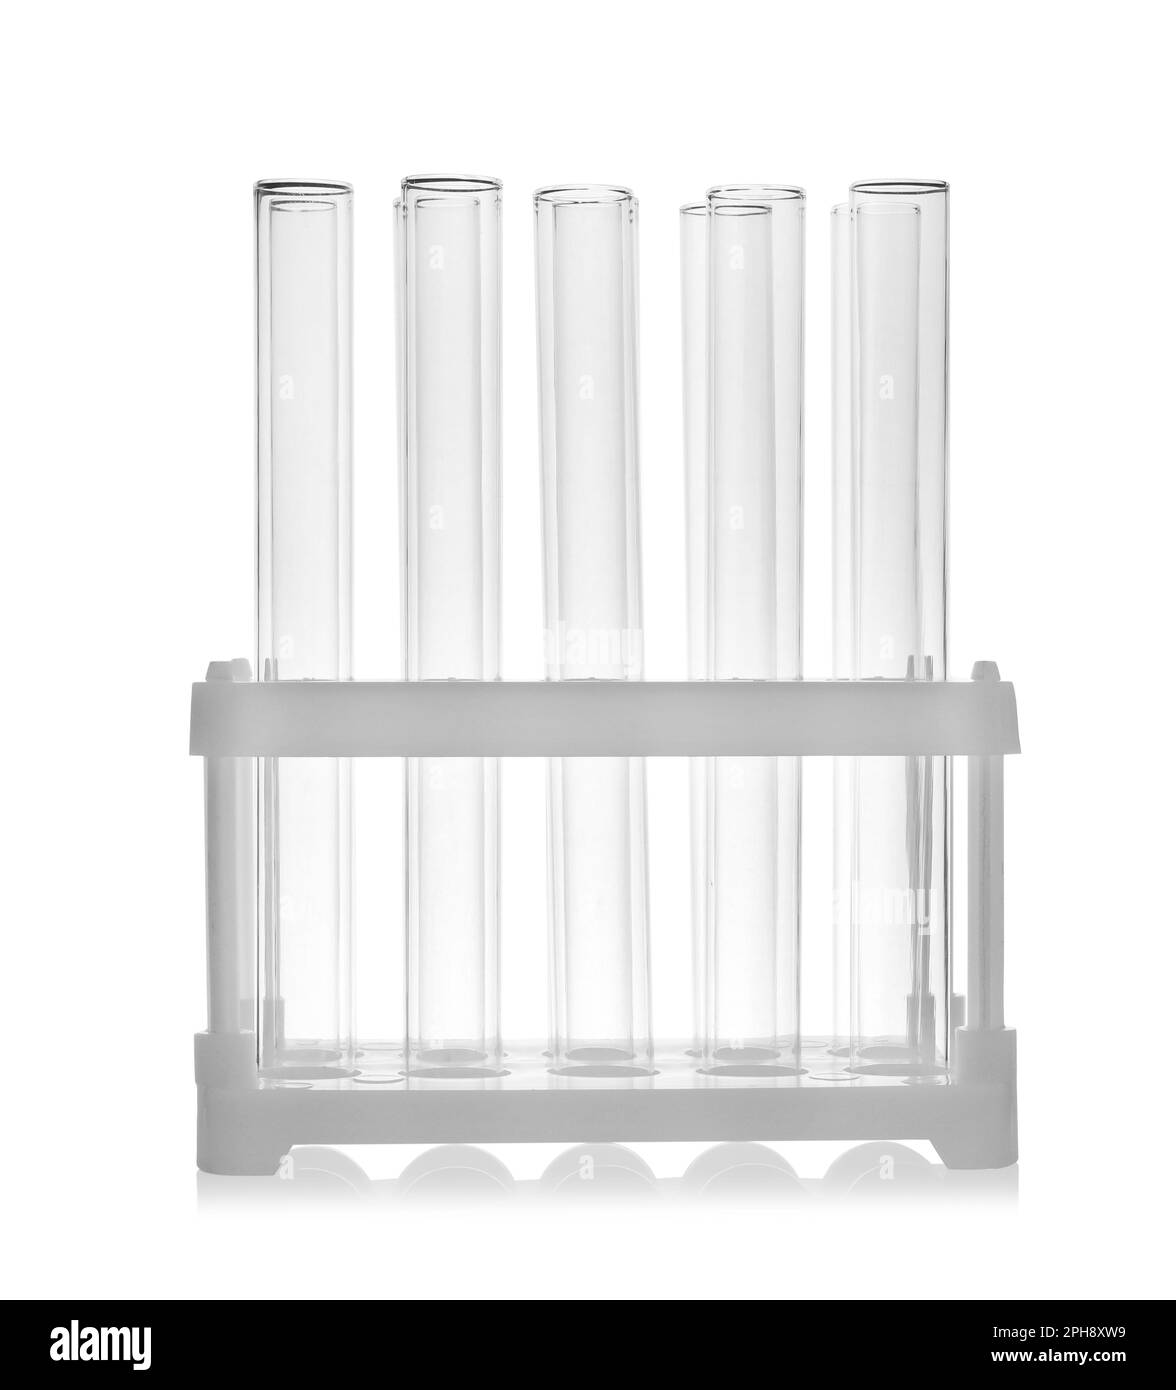 test tube rack with 4 test tubes